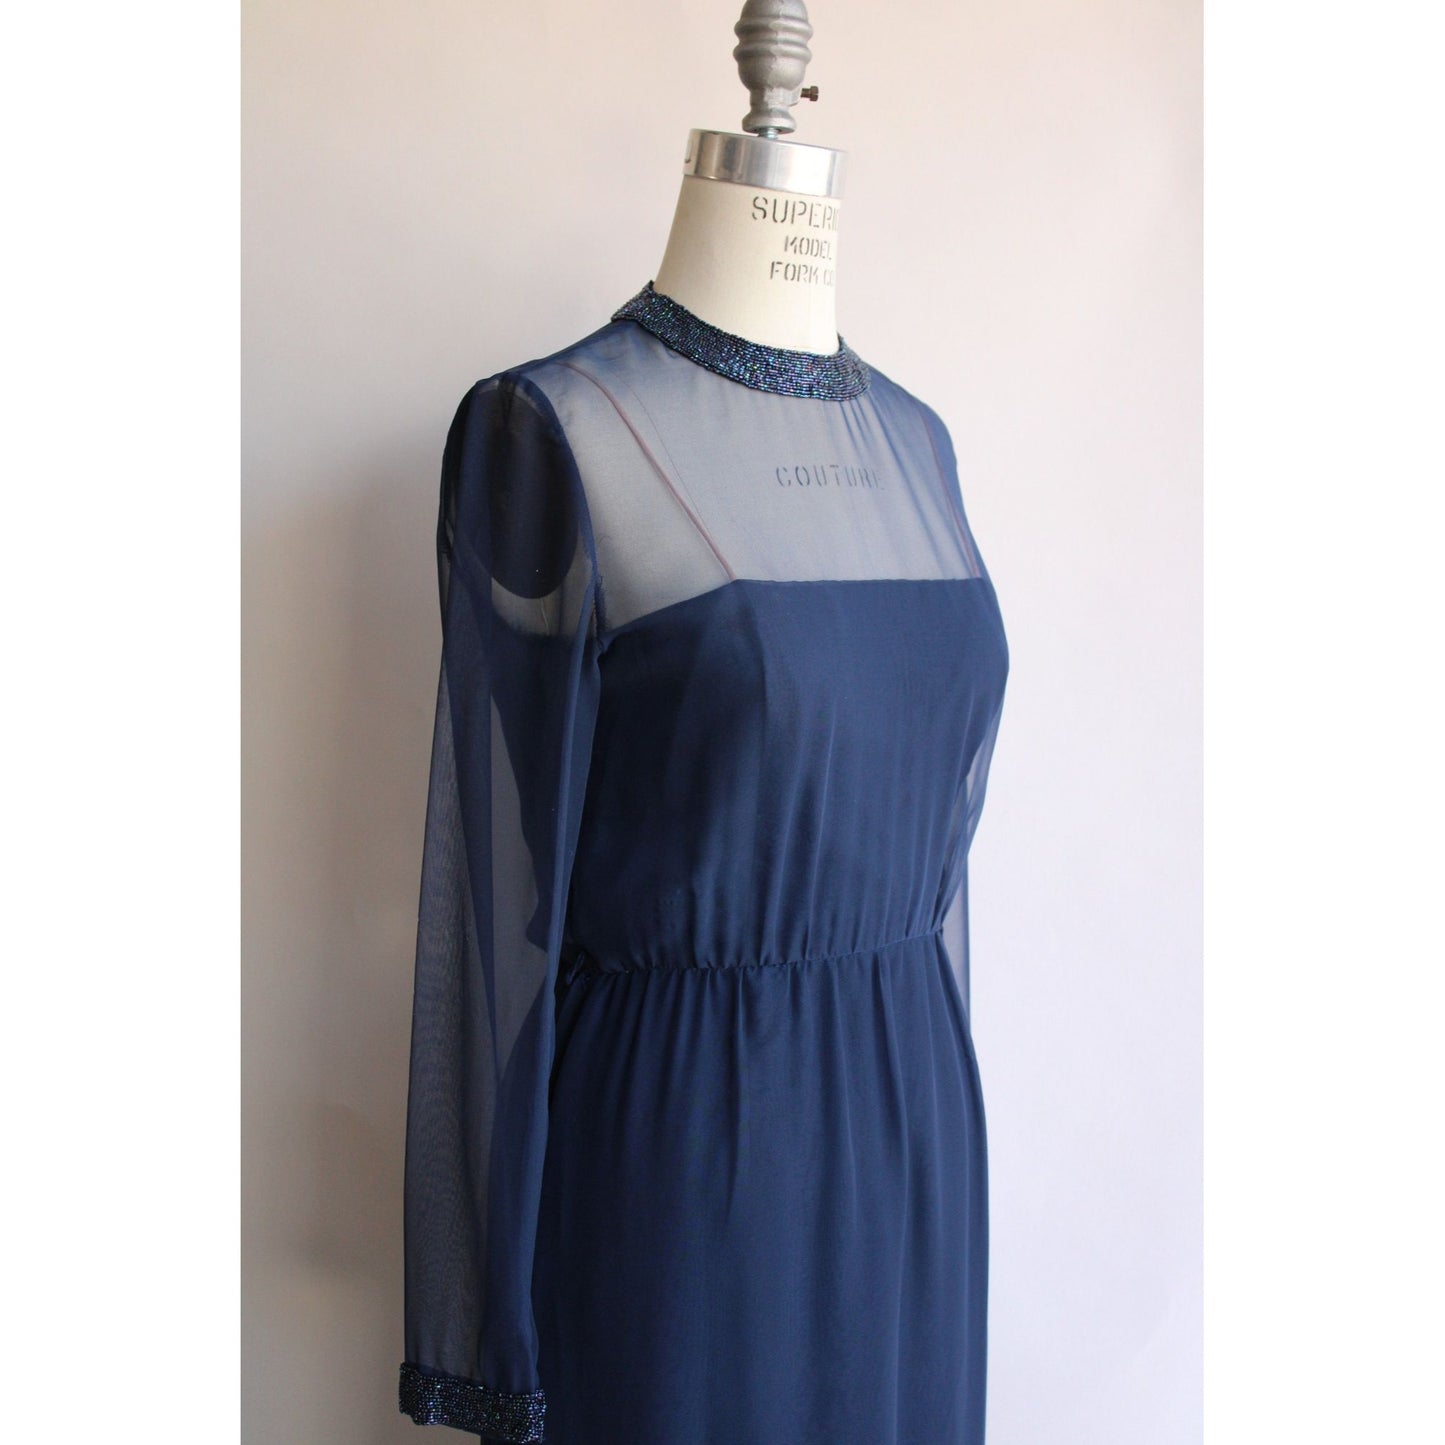 Vintage 1960s Victoria Royal Ltd. Navy Blue Cocktail Dress